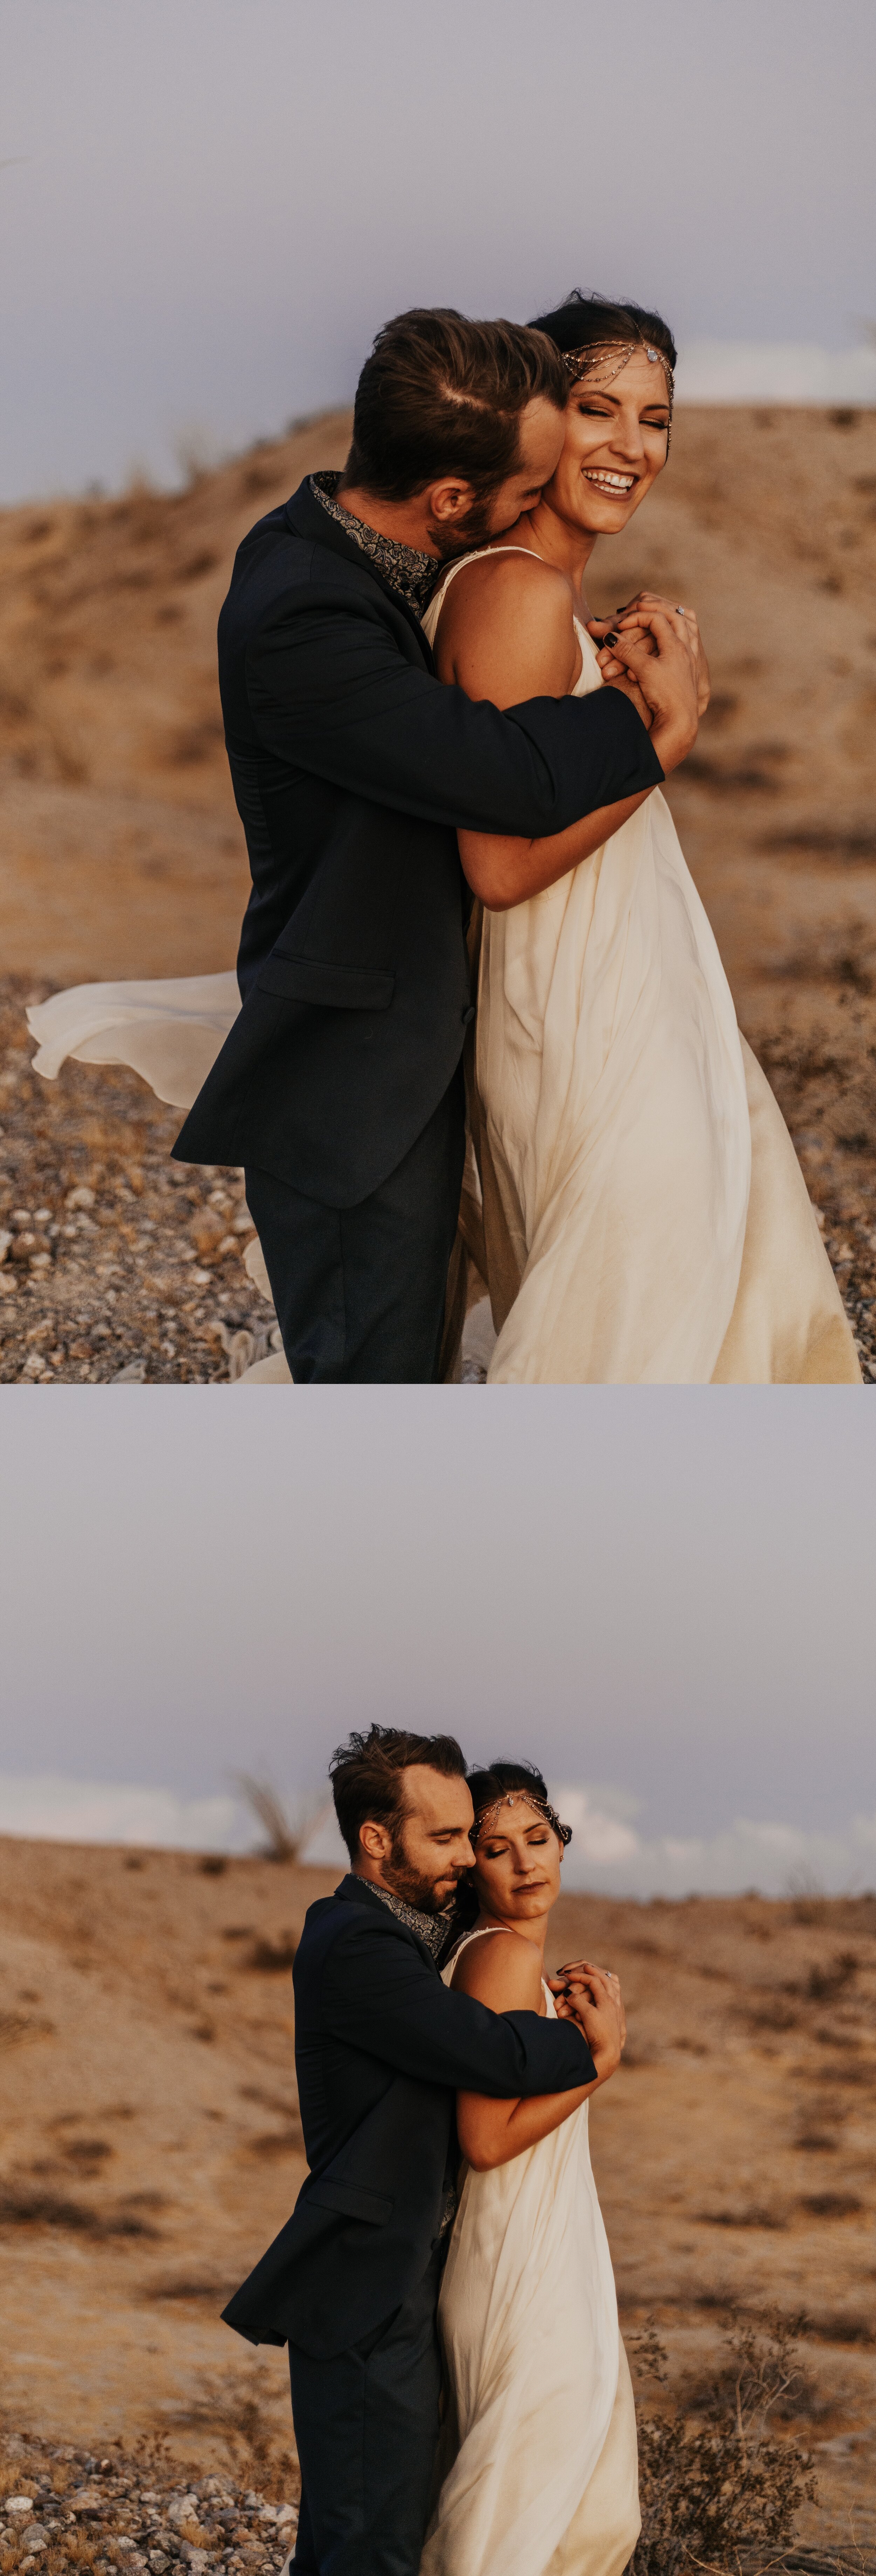 jessika-christine-photography-desert-elopement-couples-outdoor-adventurous-session (20).jpg